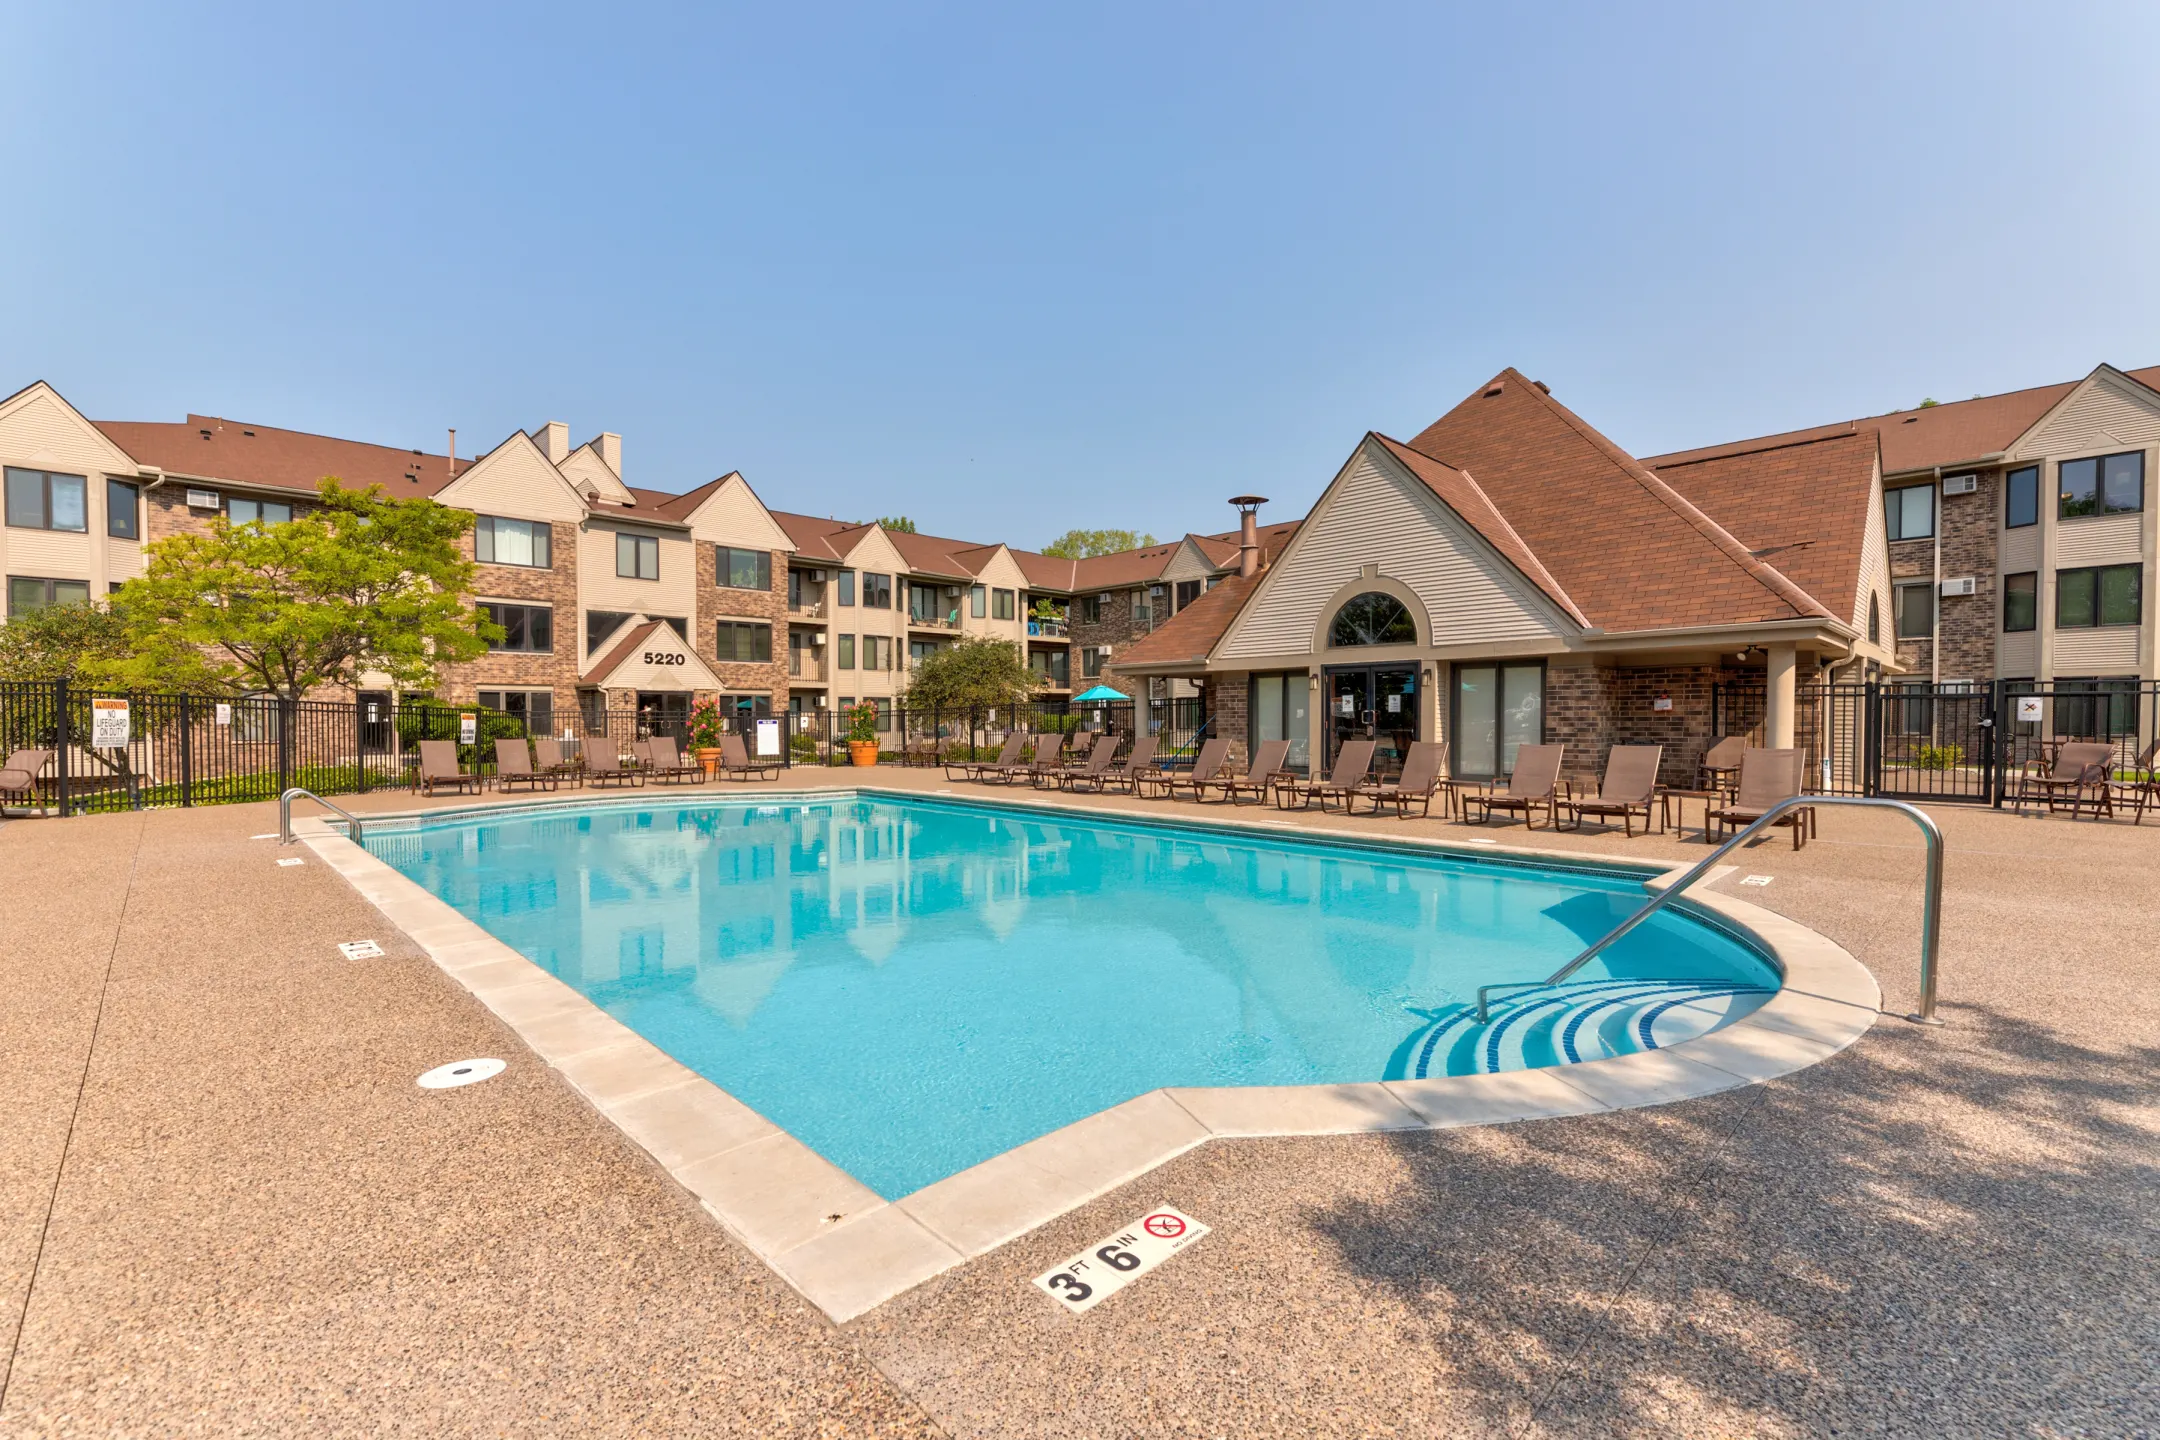 Pool - Oaks Lincoln Apartments - Edina, MN